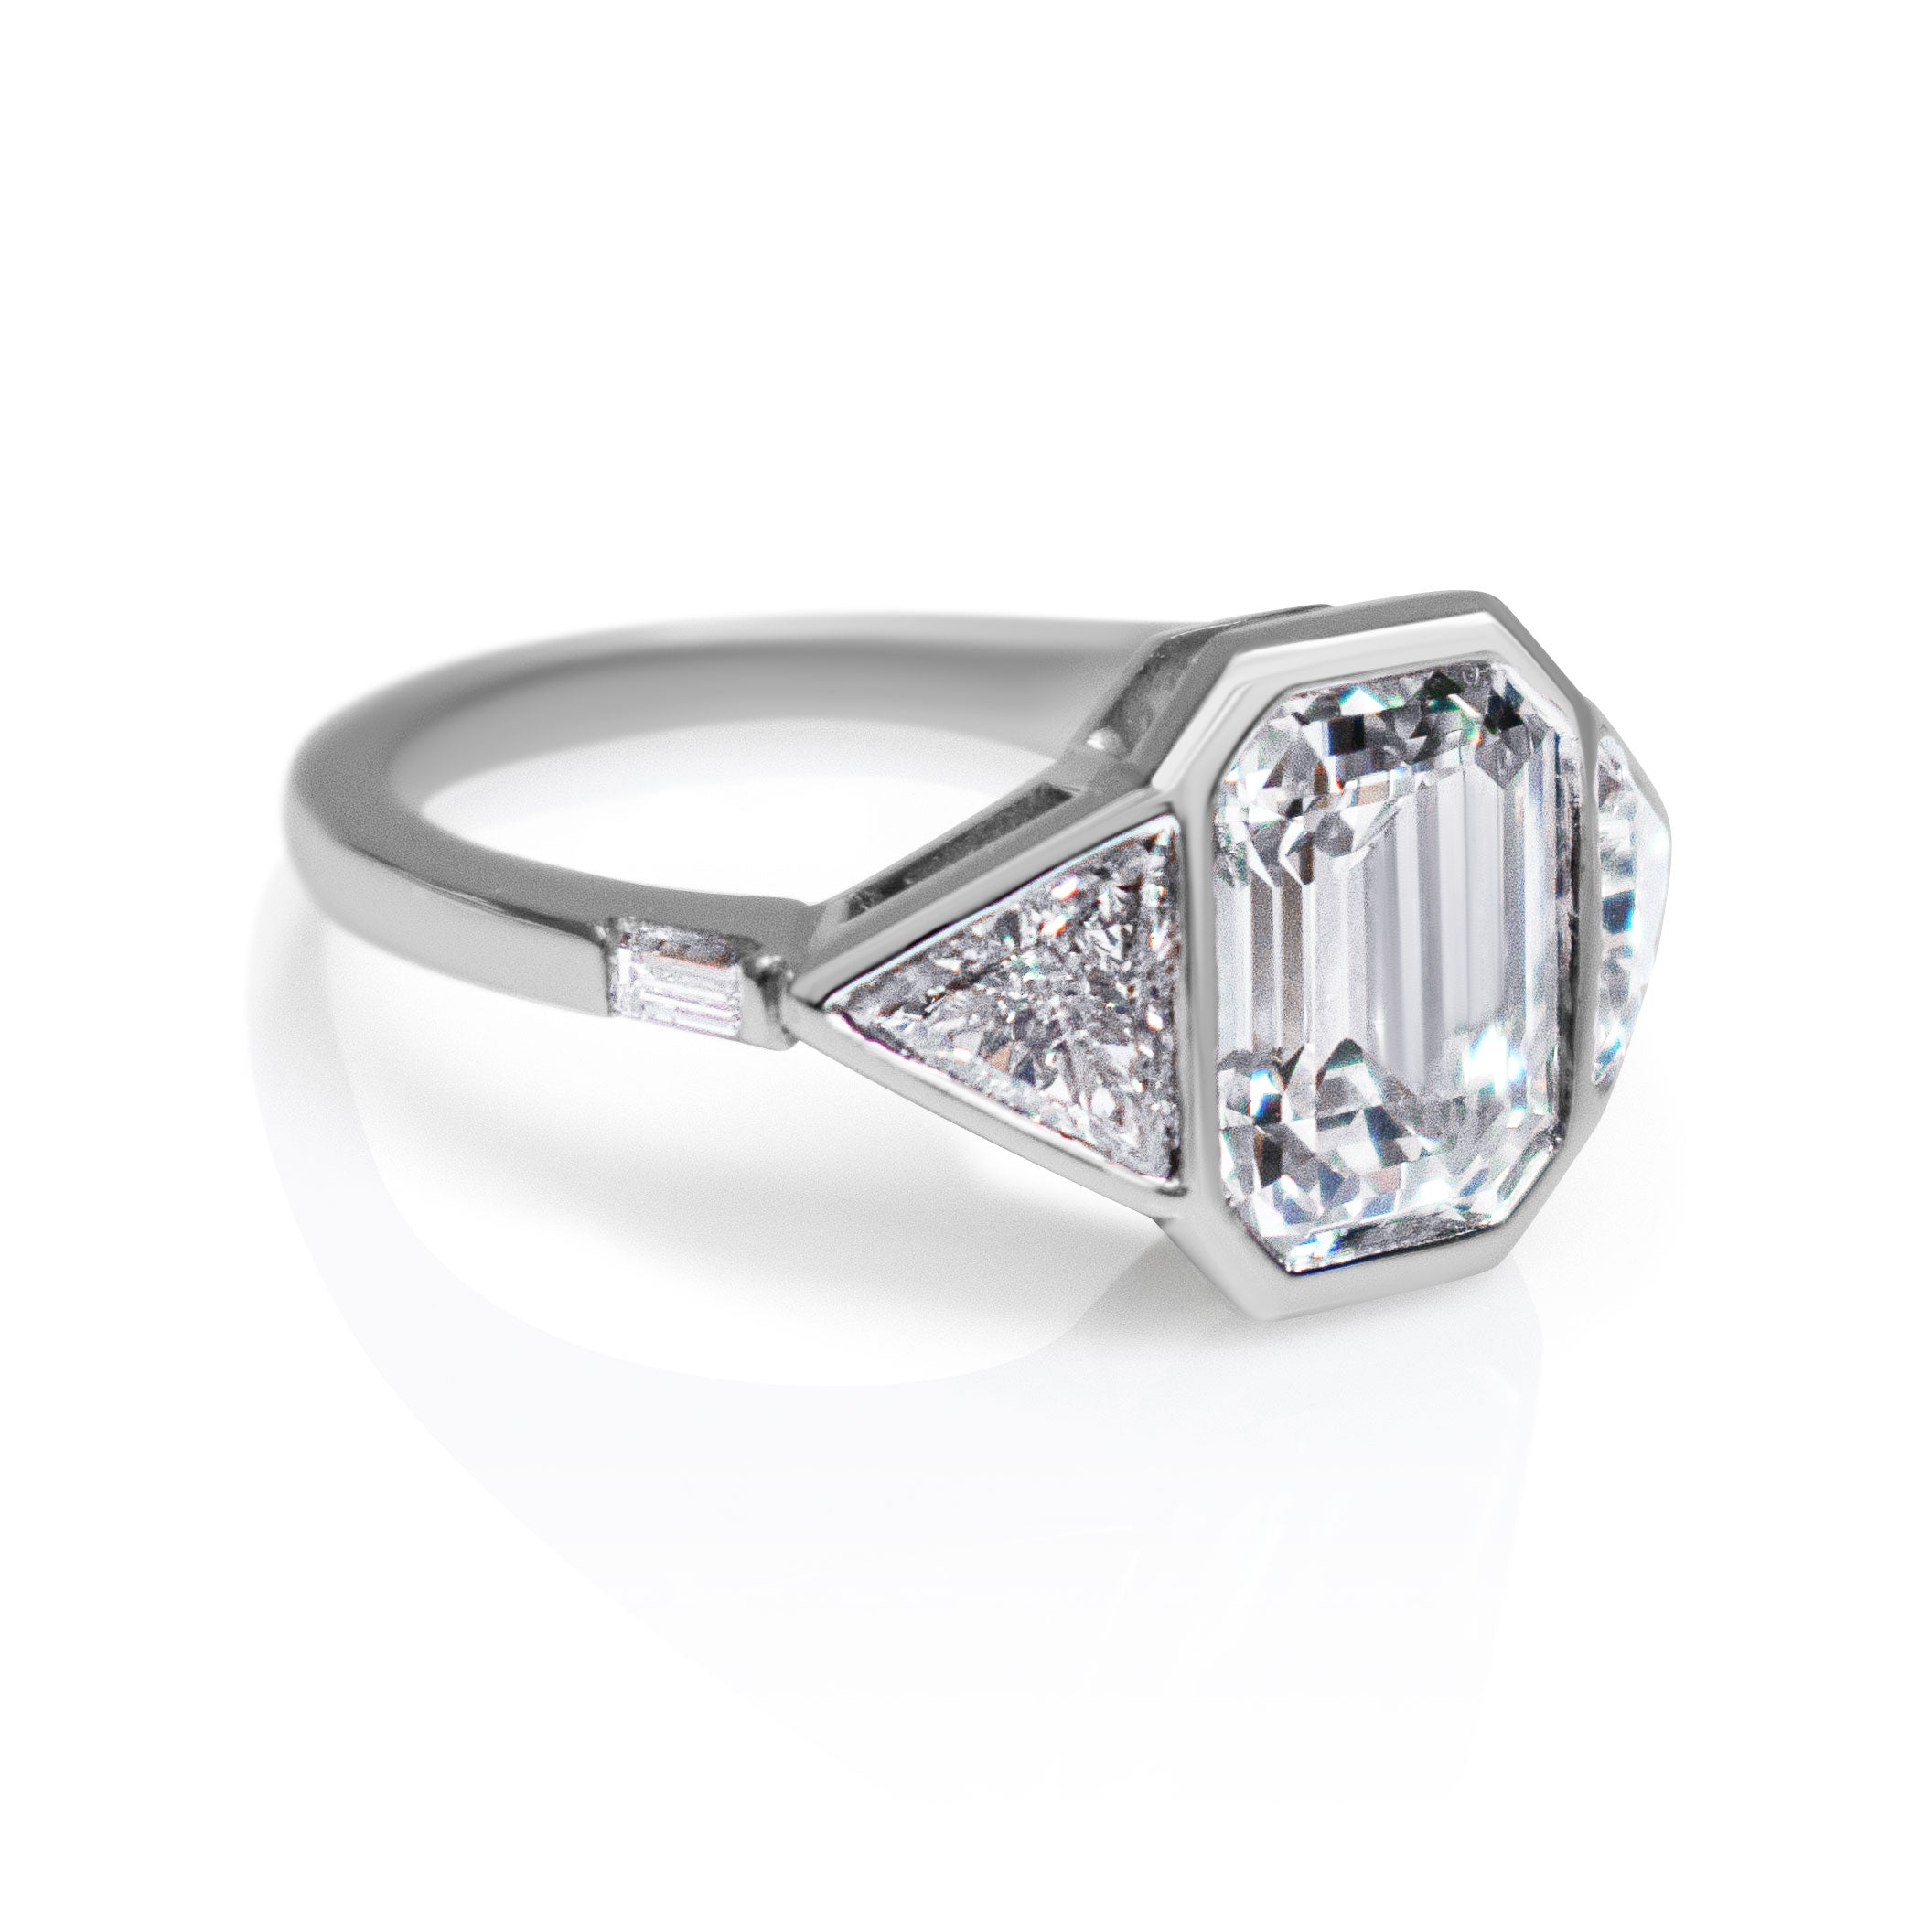 Emerald-cut diamond and triangular diamond engagement ring. Serena Ansell bespoke engagement ring design. Serena Ansell bespoke jewellery design. Bespoke engagement ring designer London. 